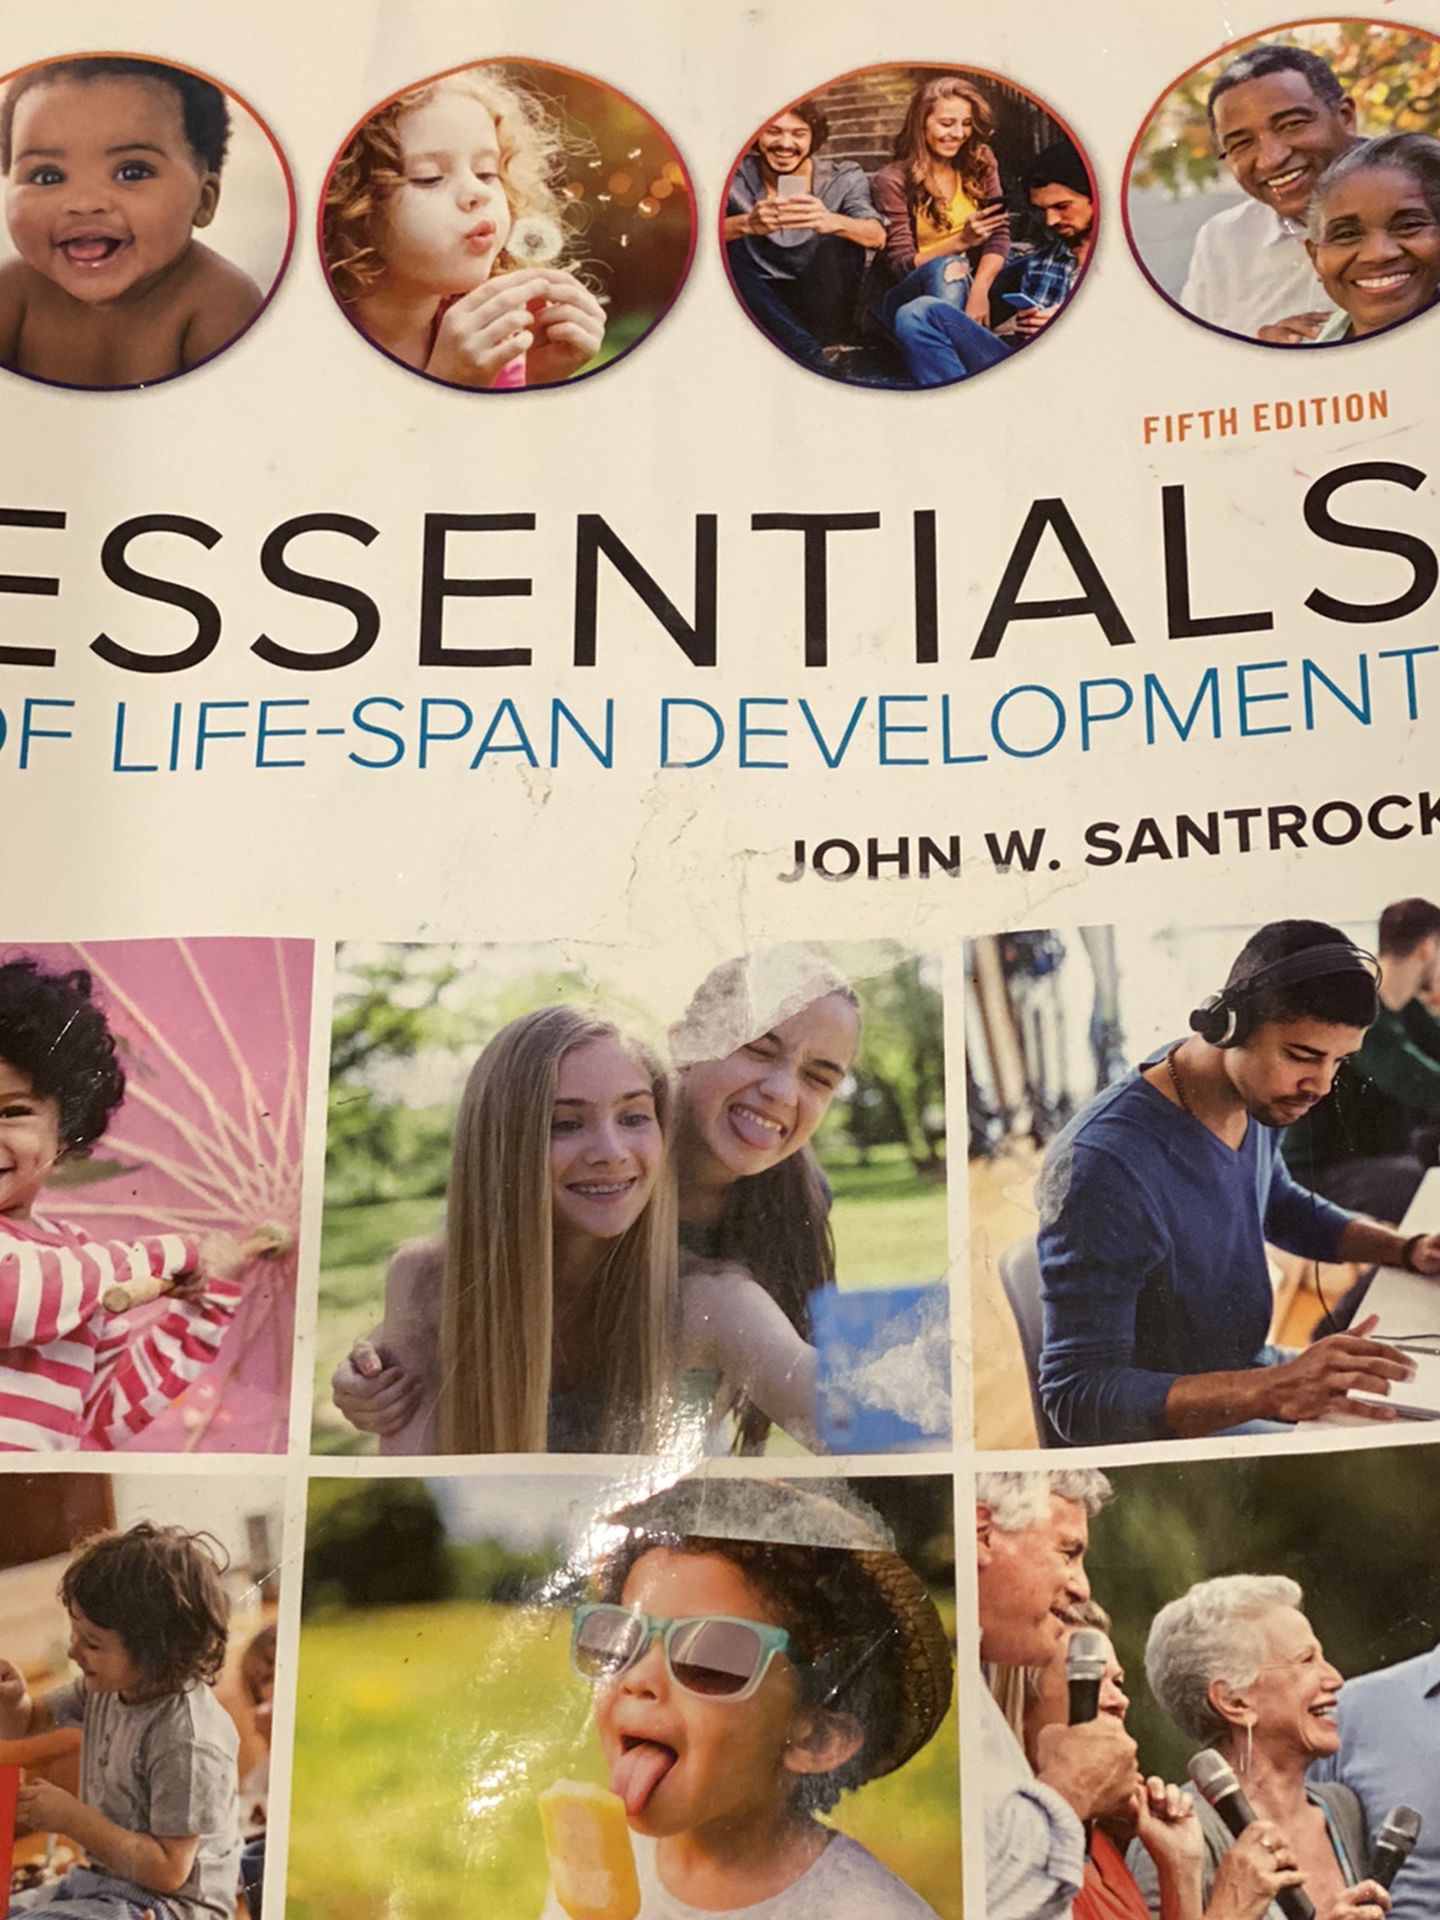 Essentials Of Life Span Development